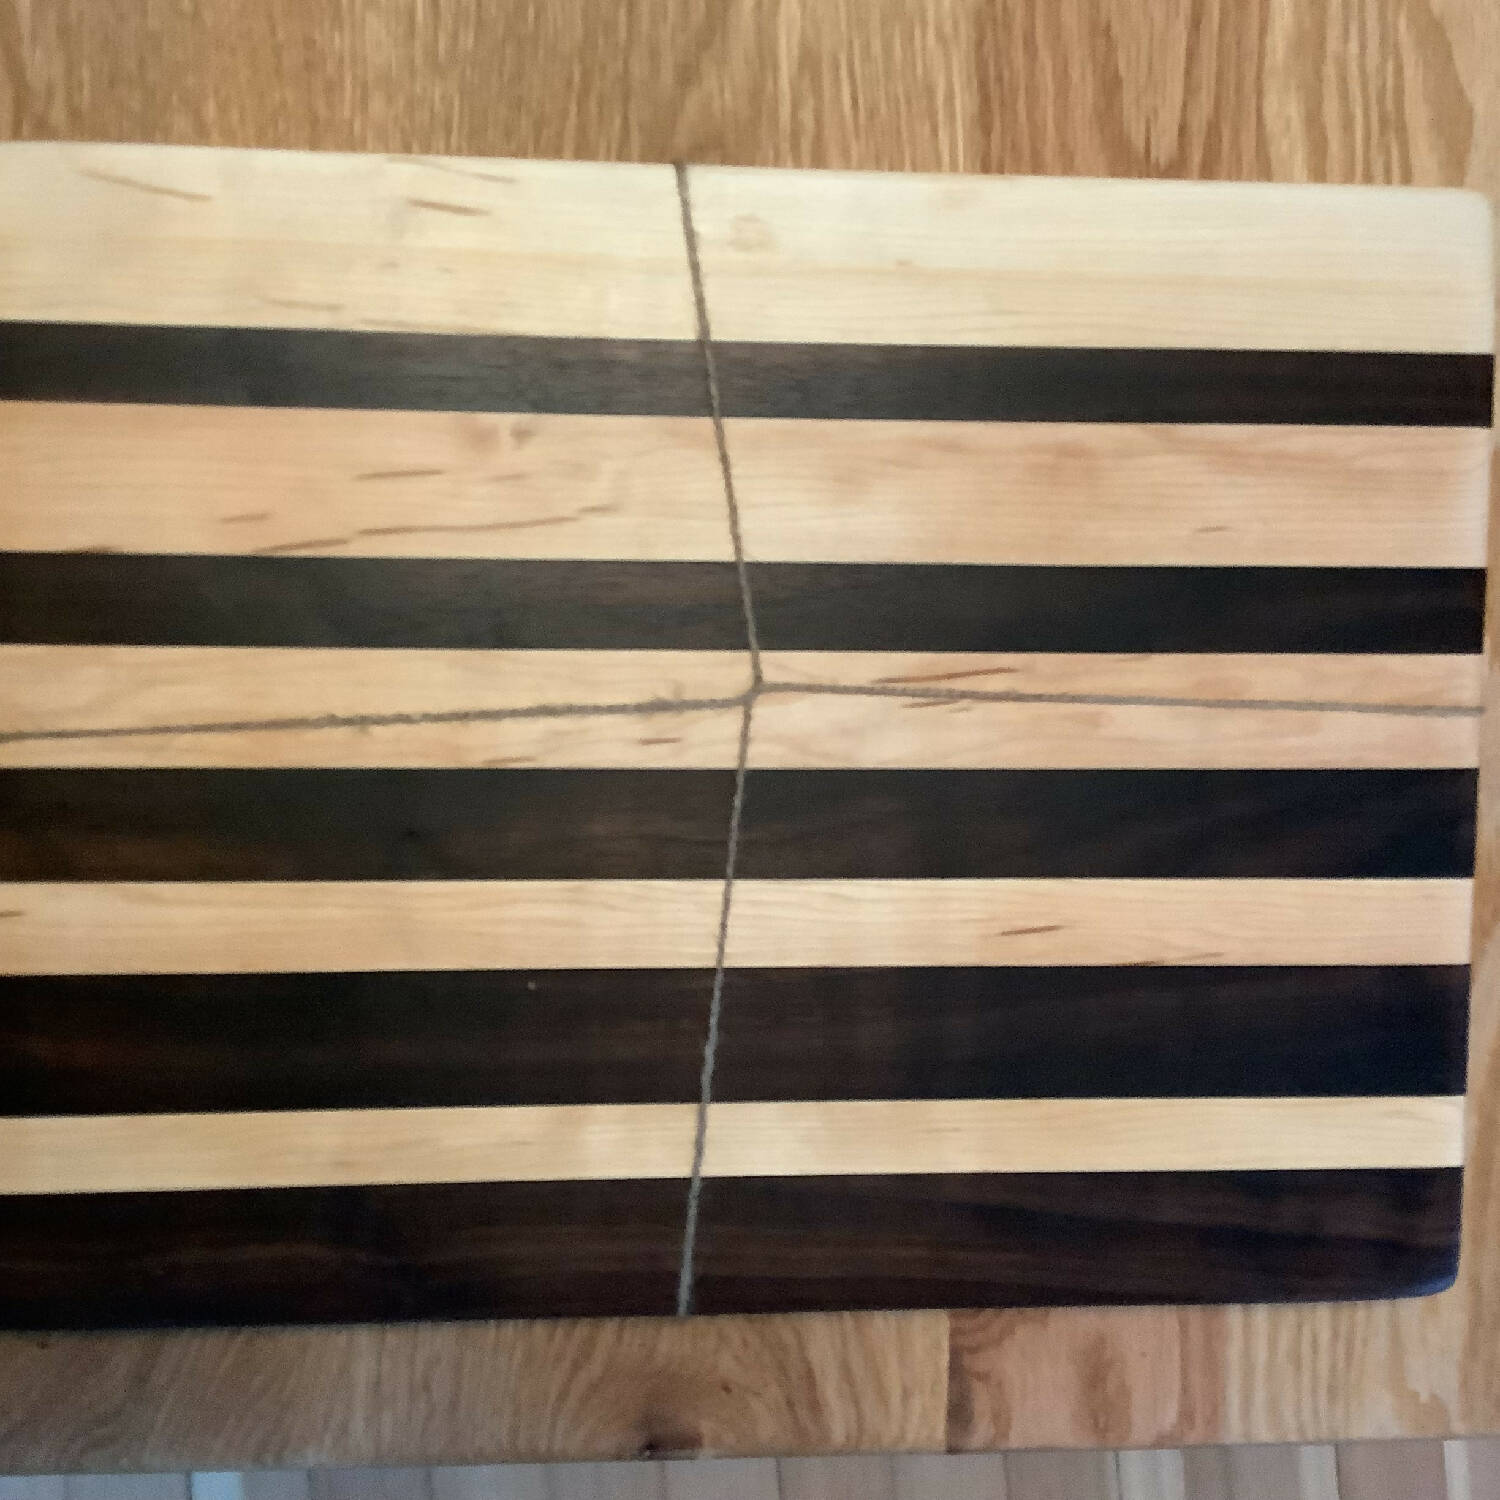 16” x 12” maple and walnut cutting board in gradient pattern